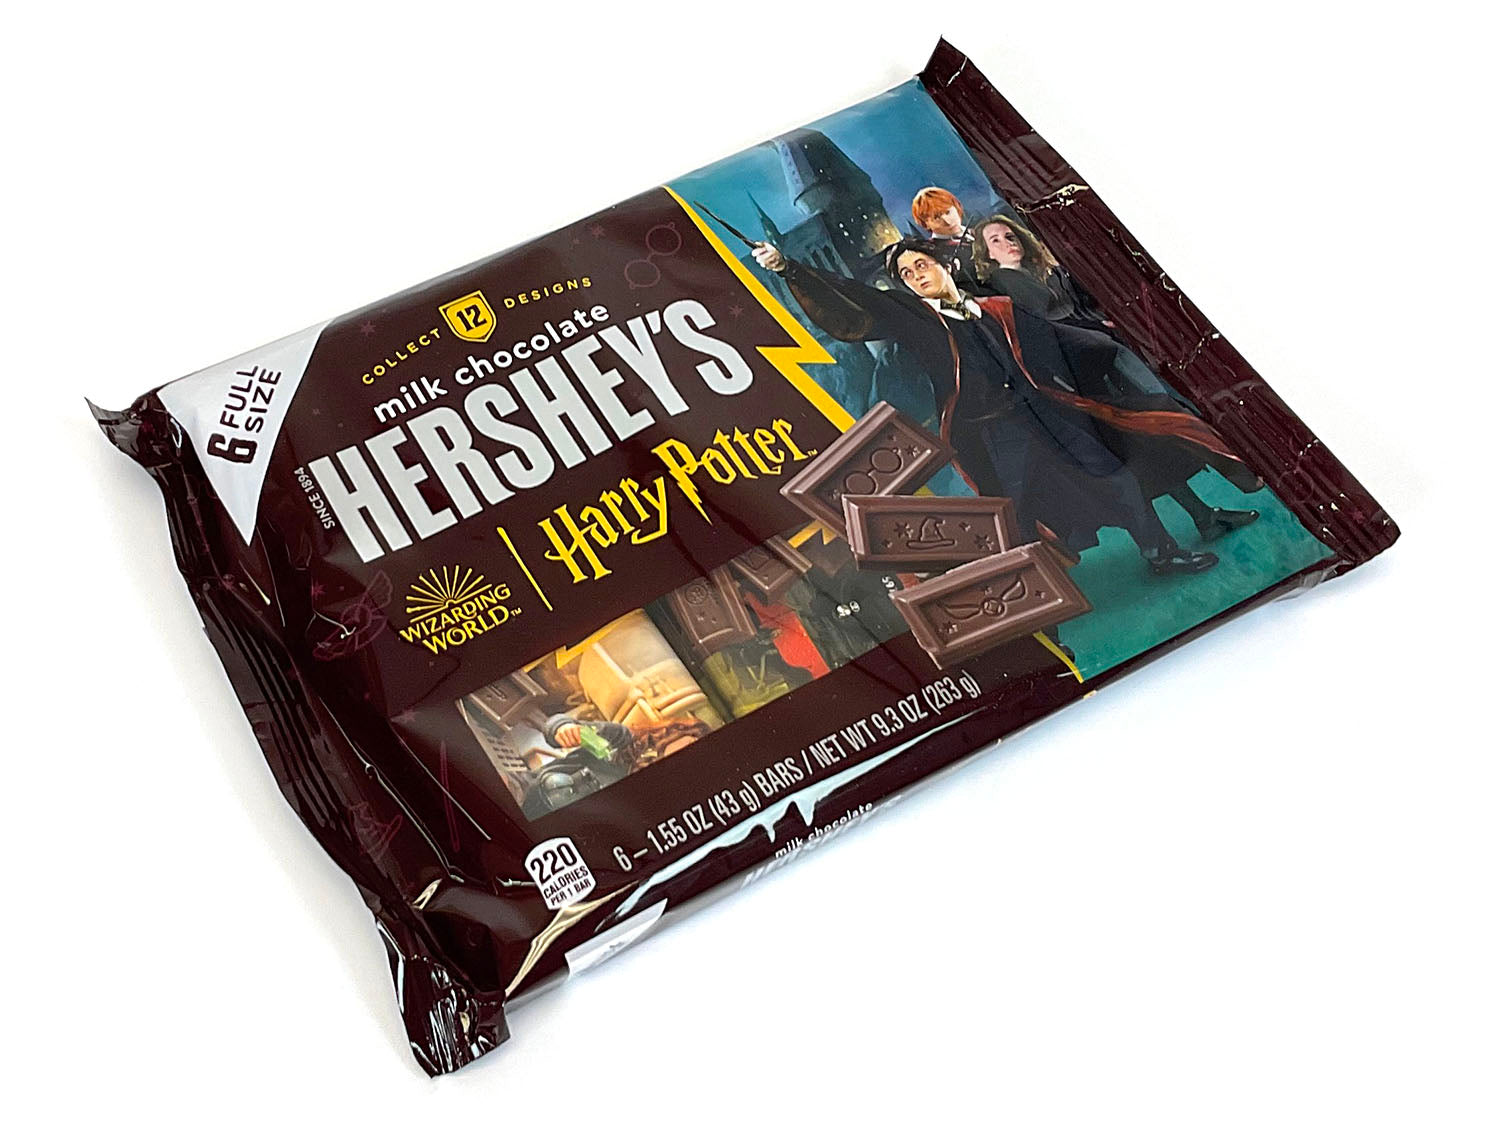 Hershey's Milk Chocolate Bars - Harry Potter - 1.55 oz bar 6-pack